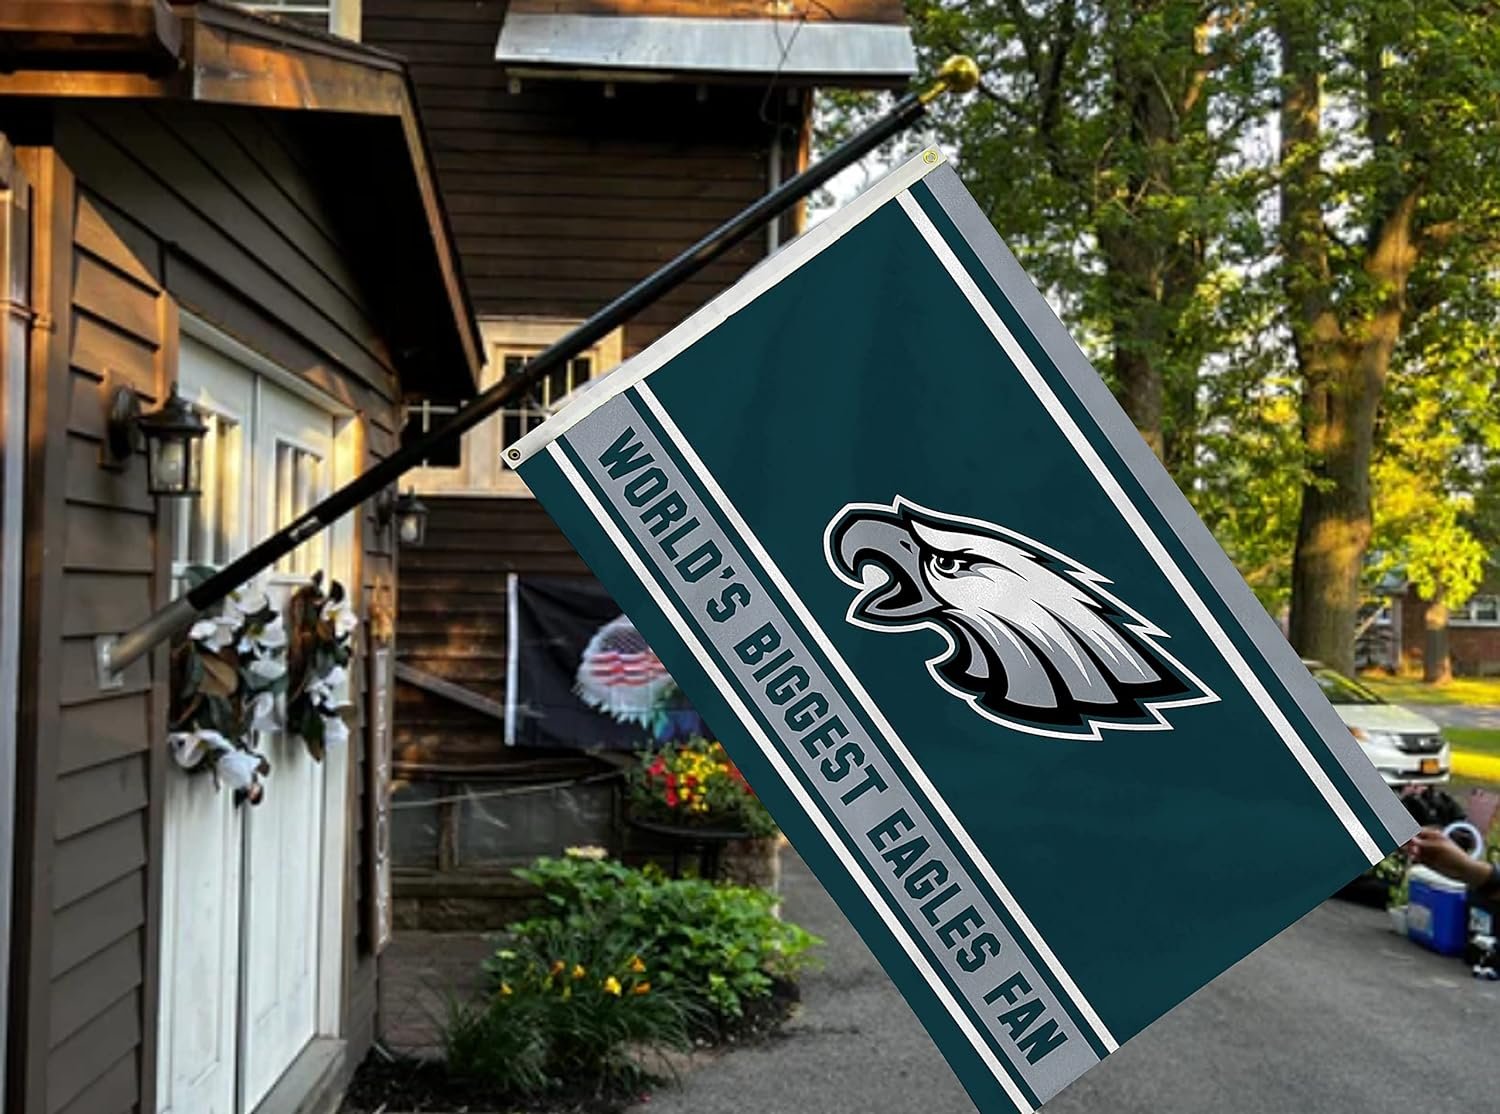 Philadelphia Eagles 3x5 Feet Flag Banner, World's Biggest Fan, Metal Grommets, Single Sided, Indoor or Outdoor Use